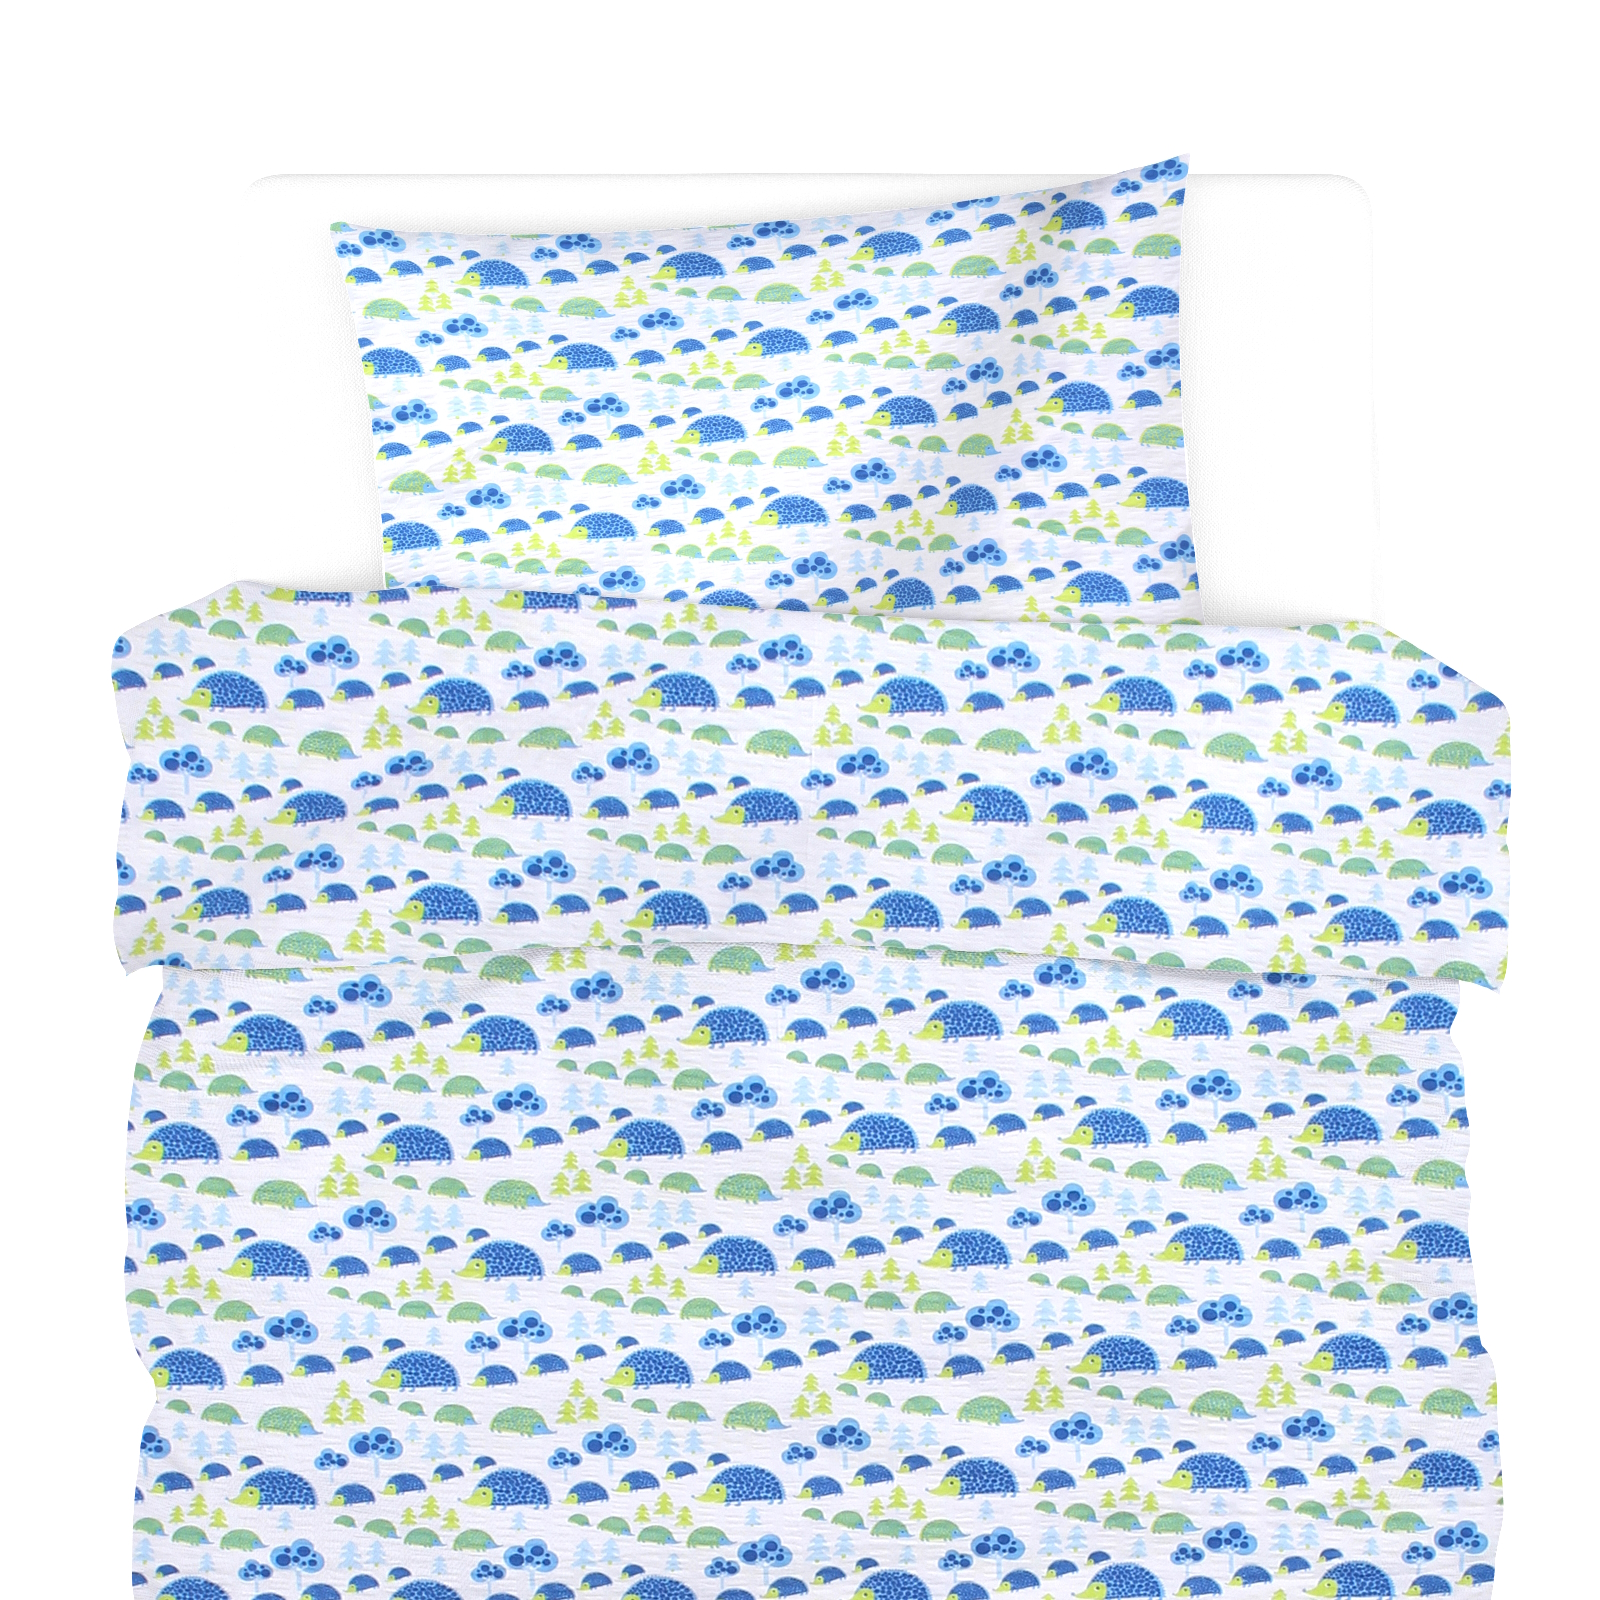 Seersucker Kinderbettwäsche Igel Blau 135x200 + 80x80 cm